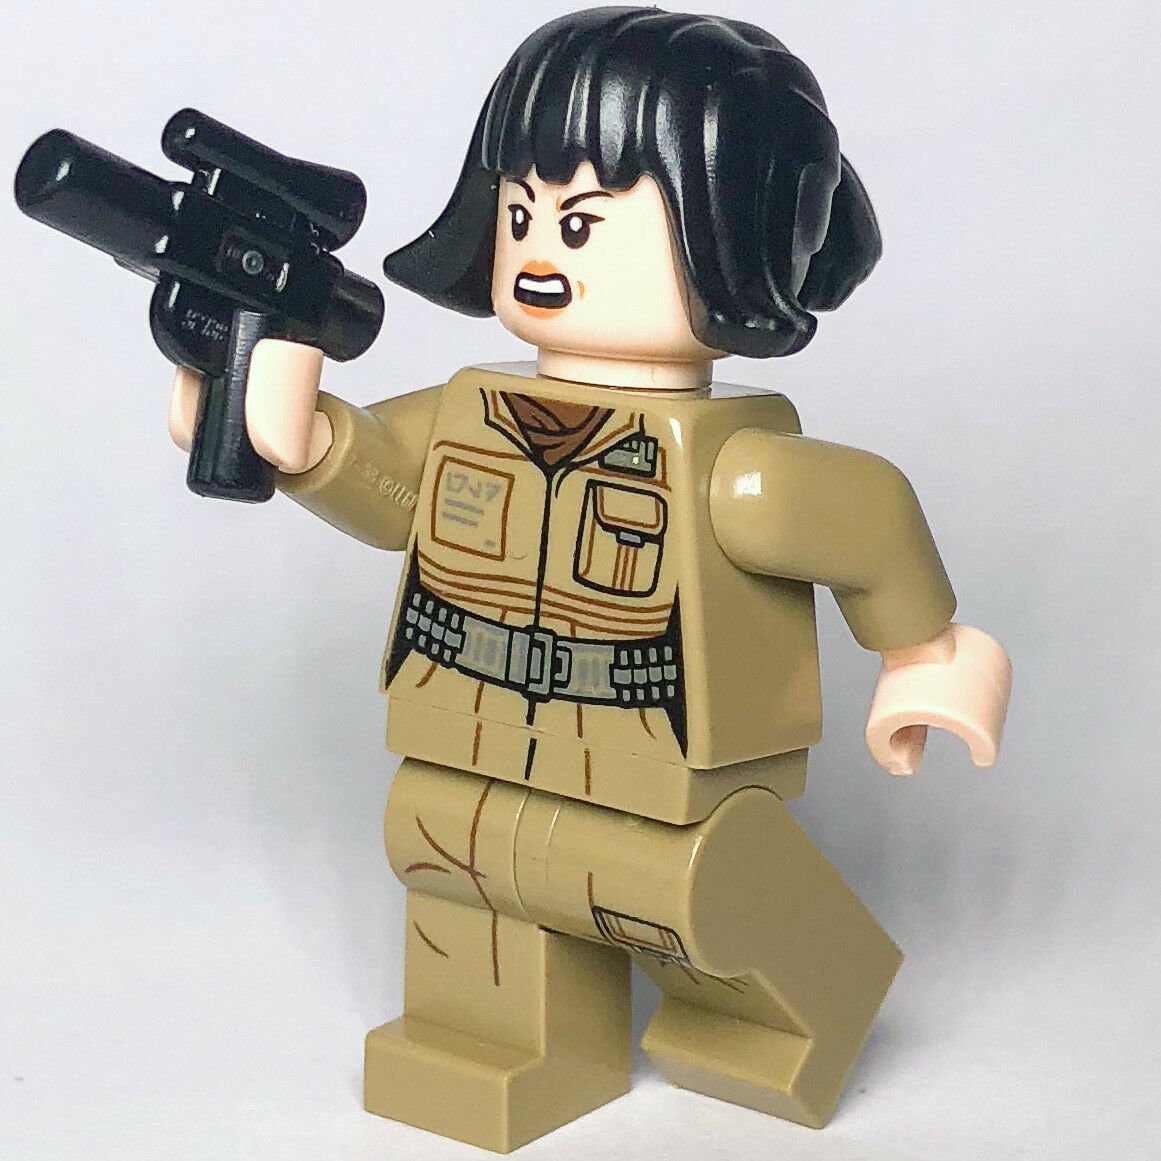 New Star Wars LEGO Rose Tico Resistance Engineer Last Jedi Minifigure 75176 - Bricks & Figures